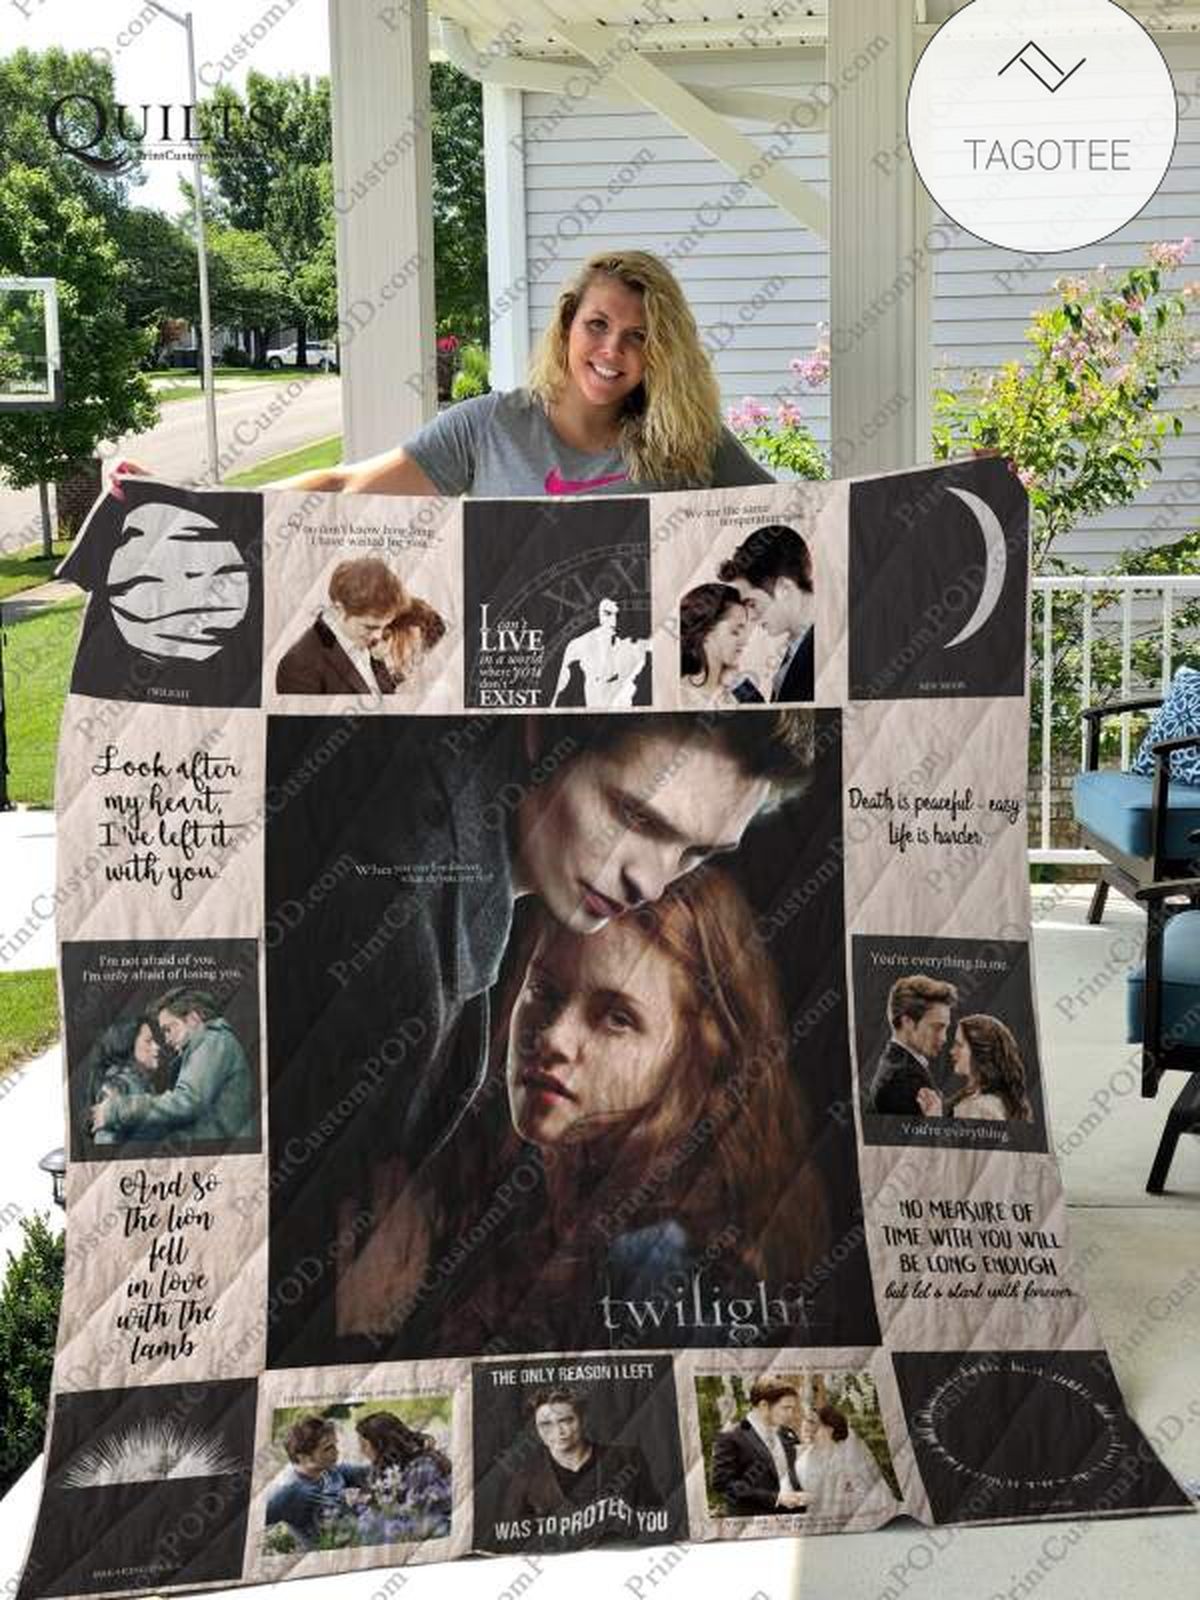 The Twilight Saga Quilt Blanket